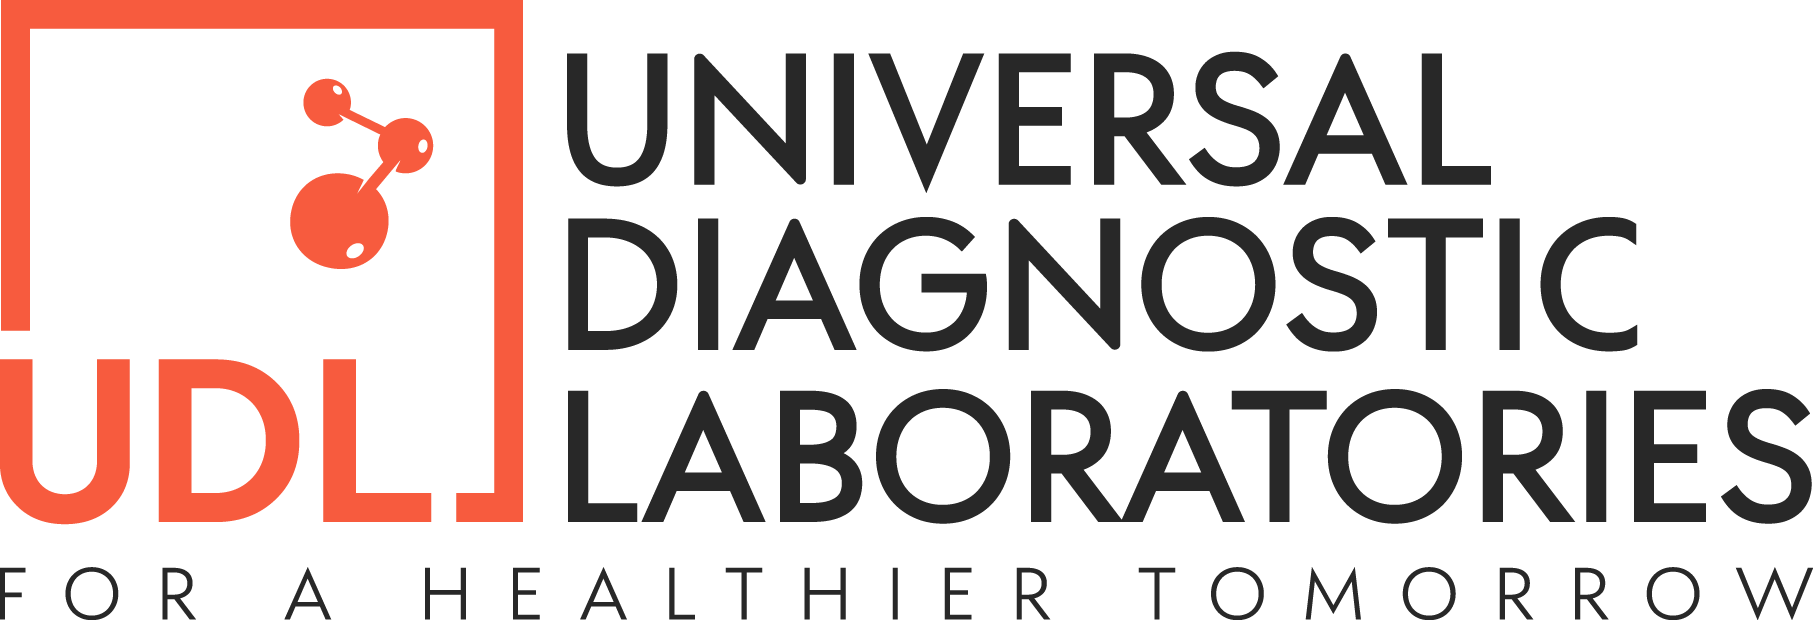 Universal Diagnostic Laboratories